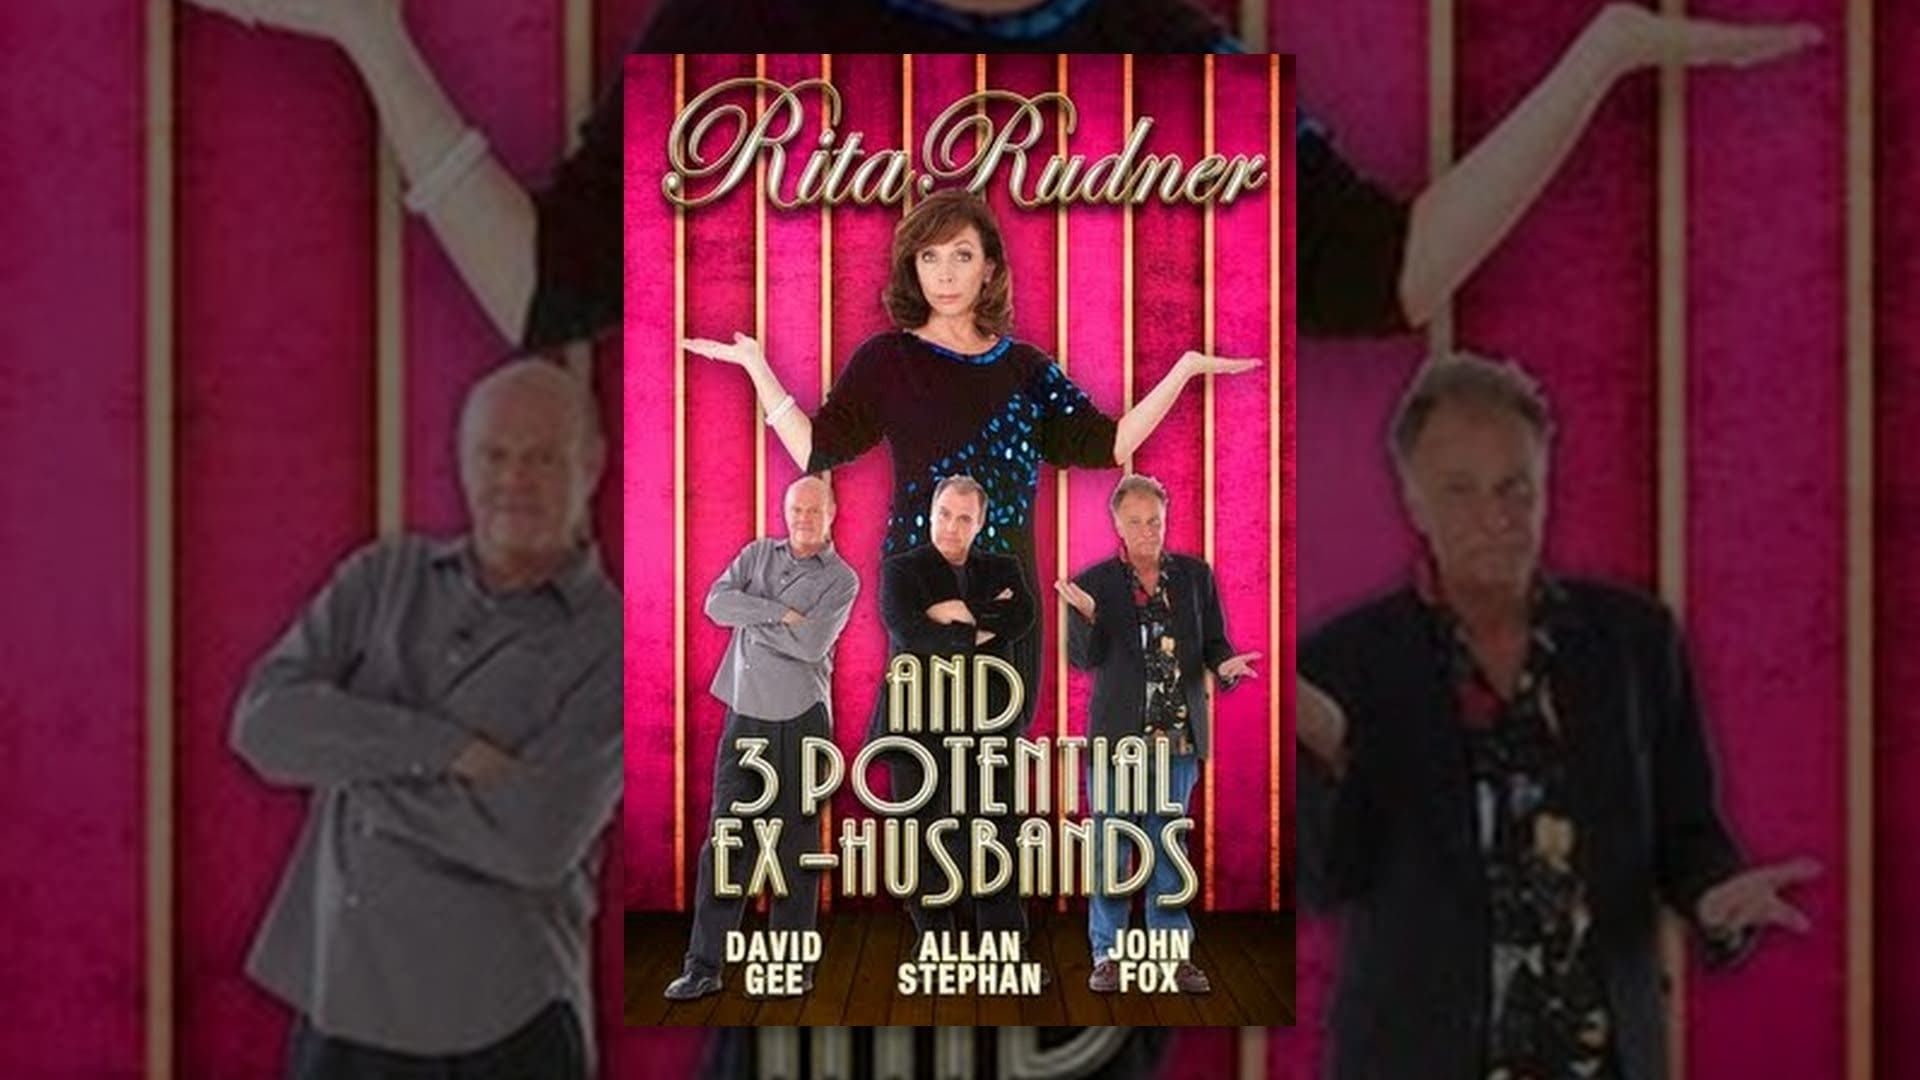 Rita Rudner and 3 Potential Ex-Husbands background